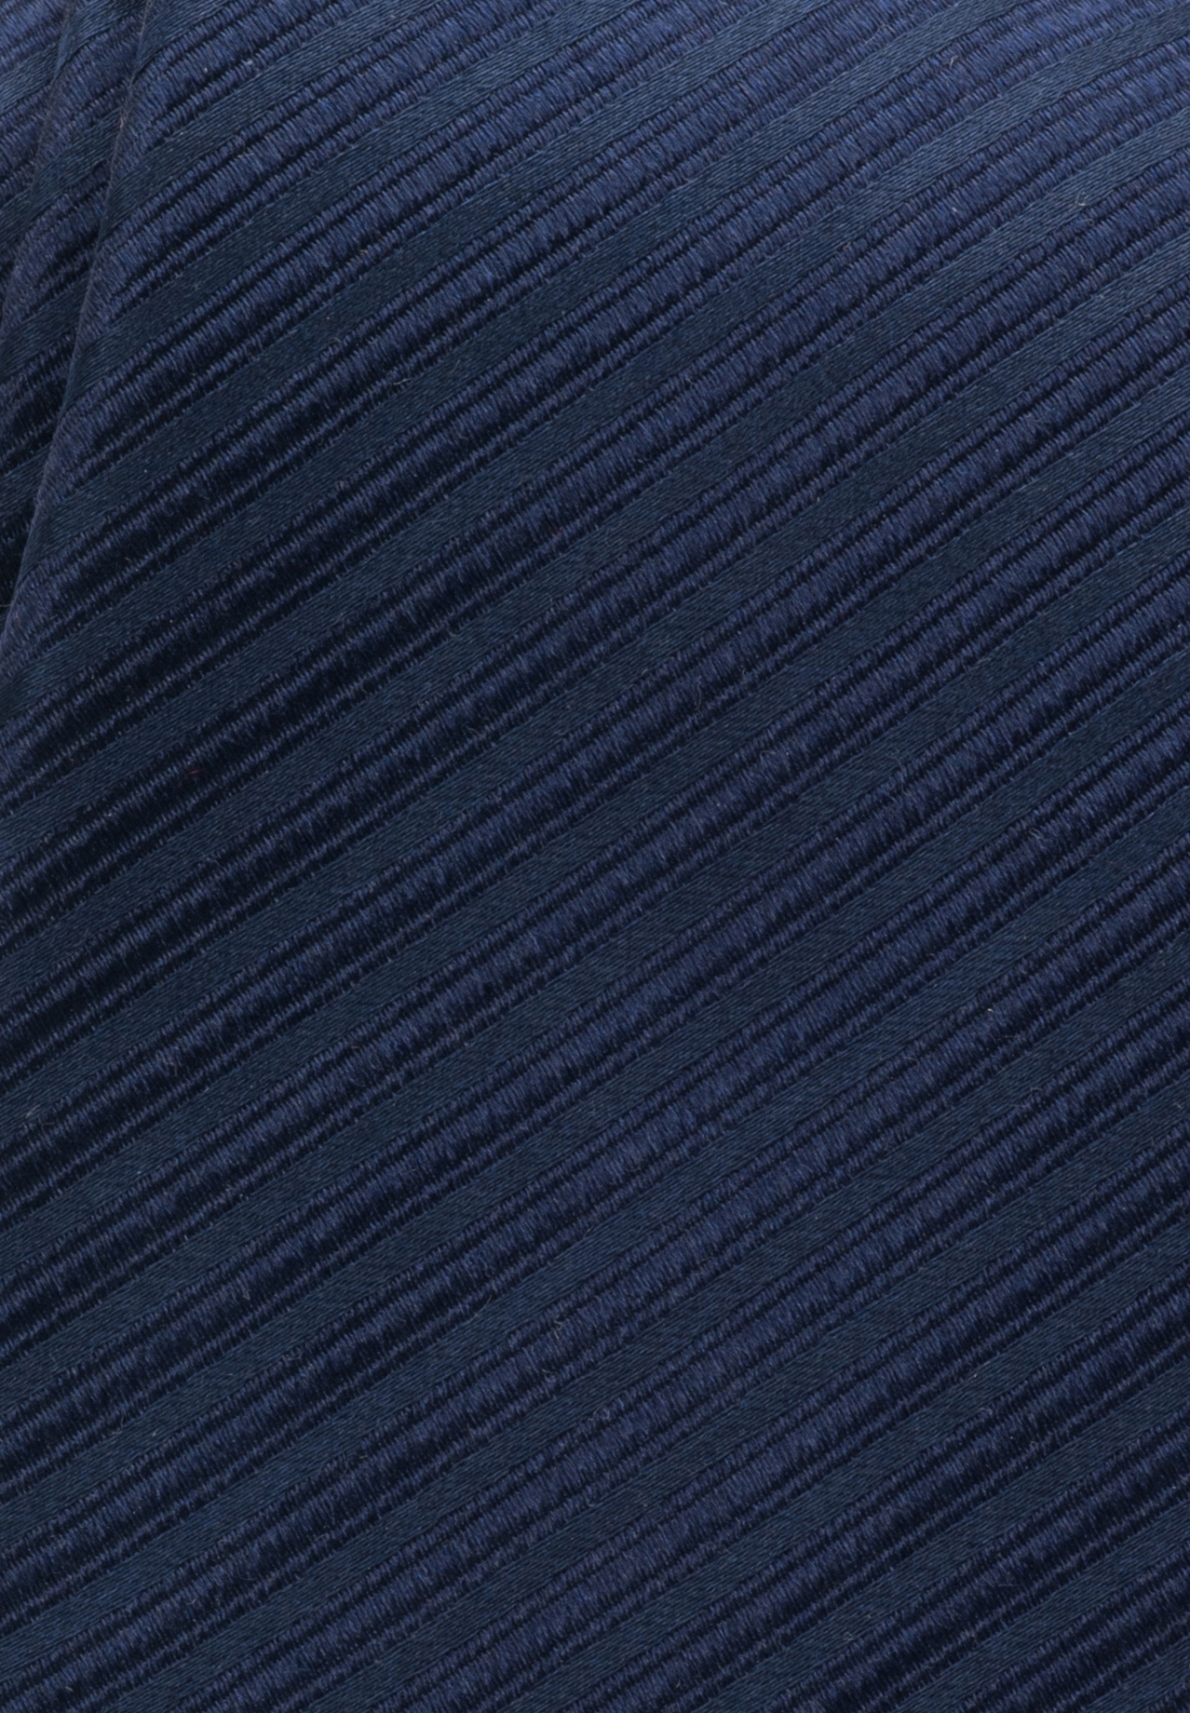 Eterna Krawatte dunkelblau MODE 9716-19 | gestreift SPEZIALIST